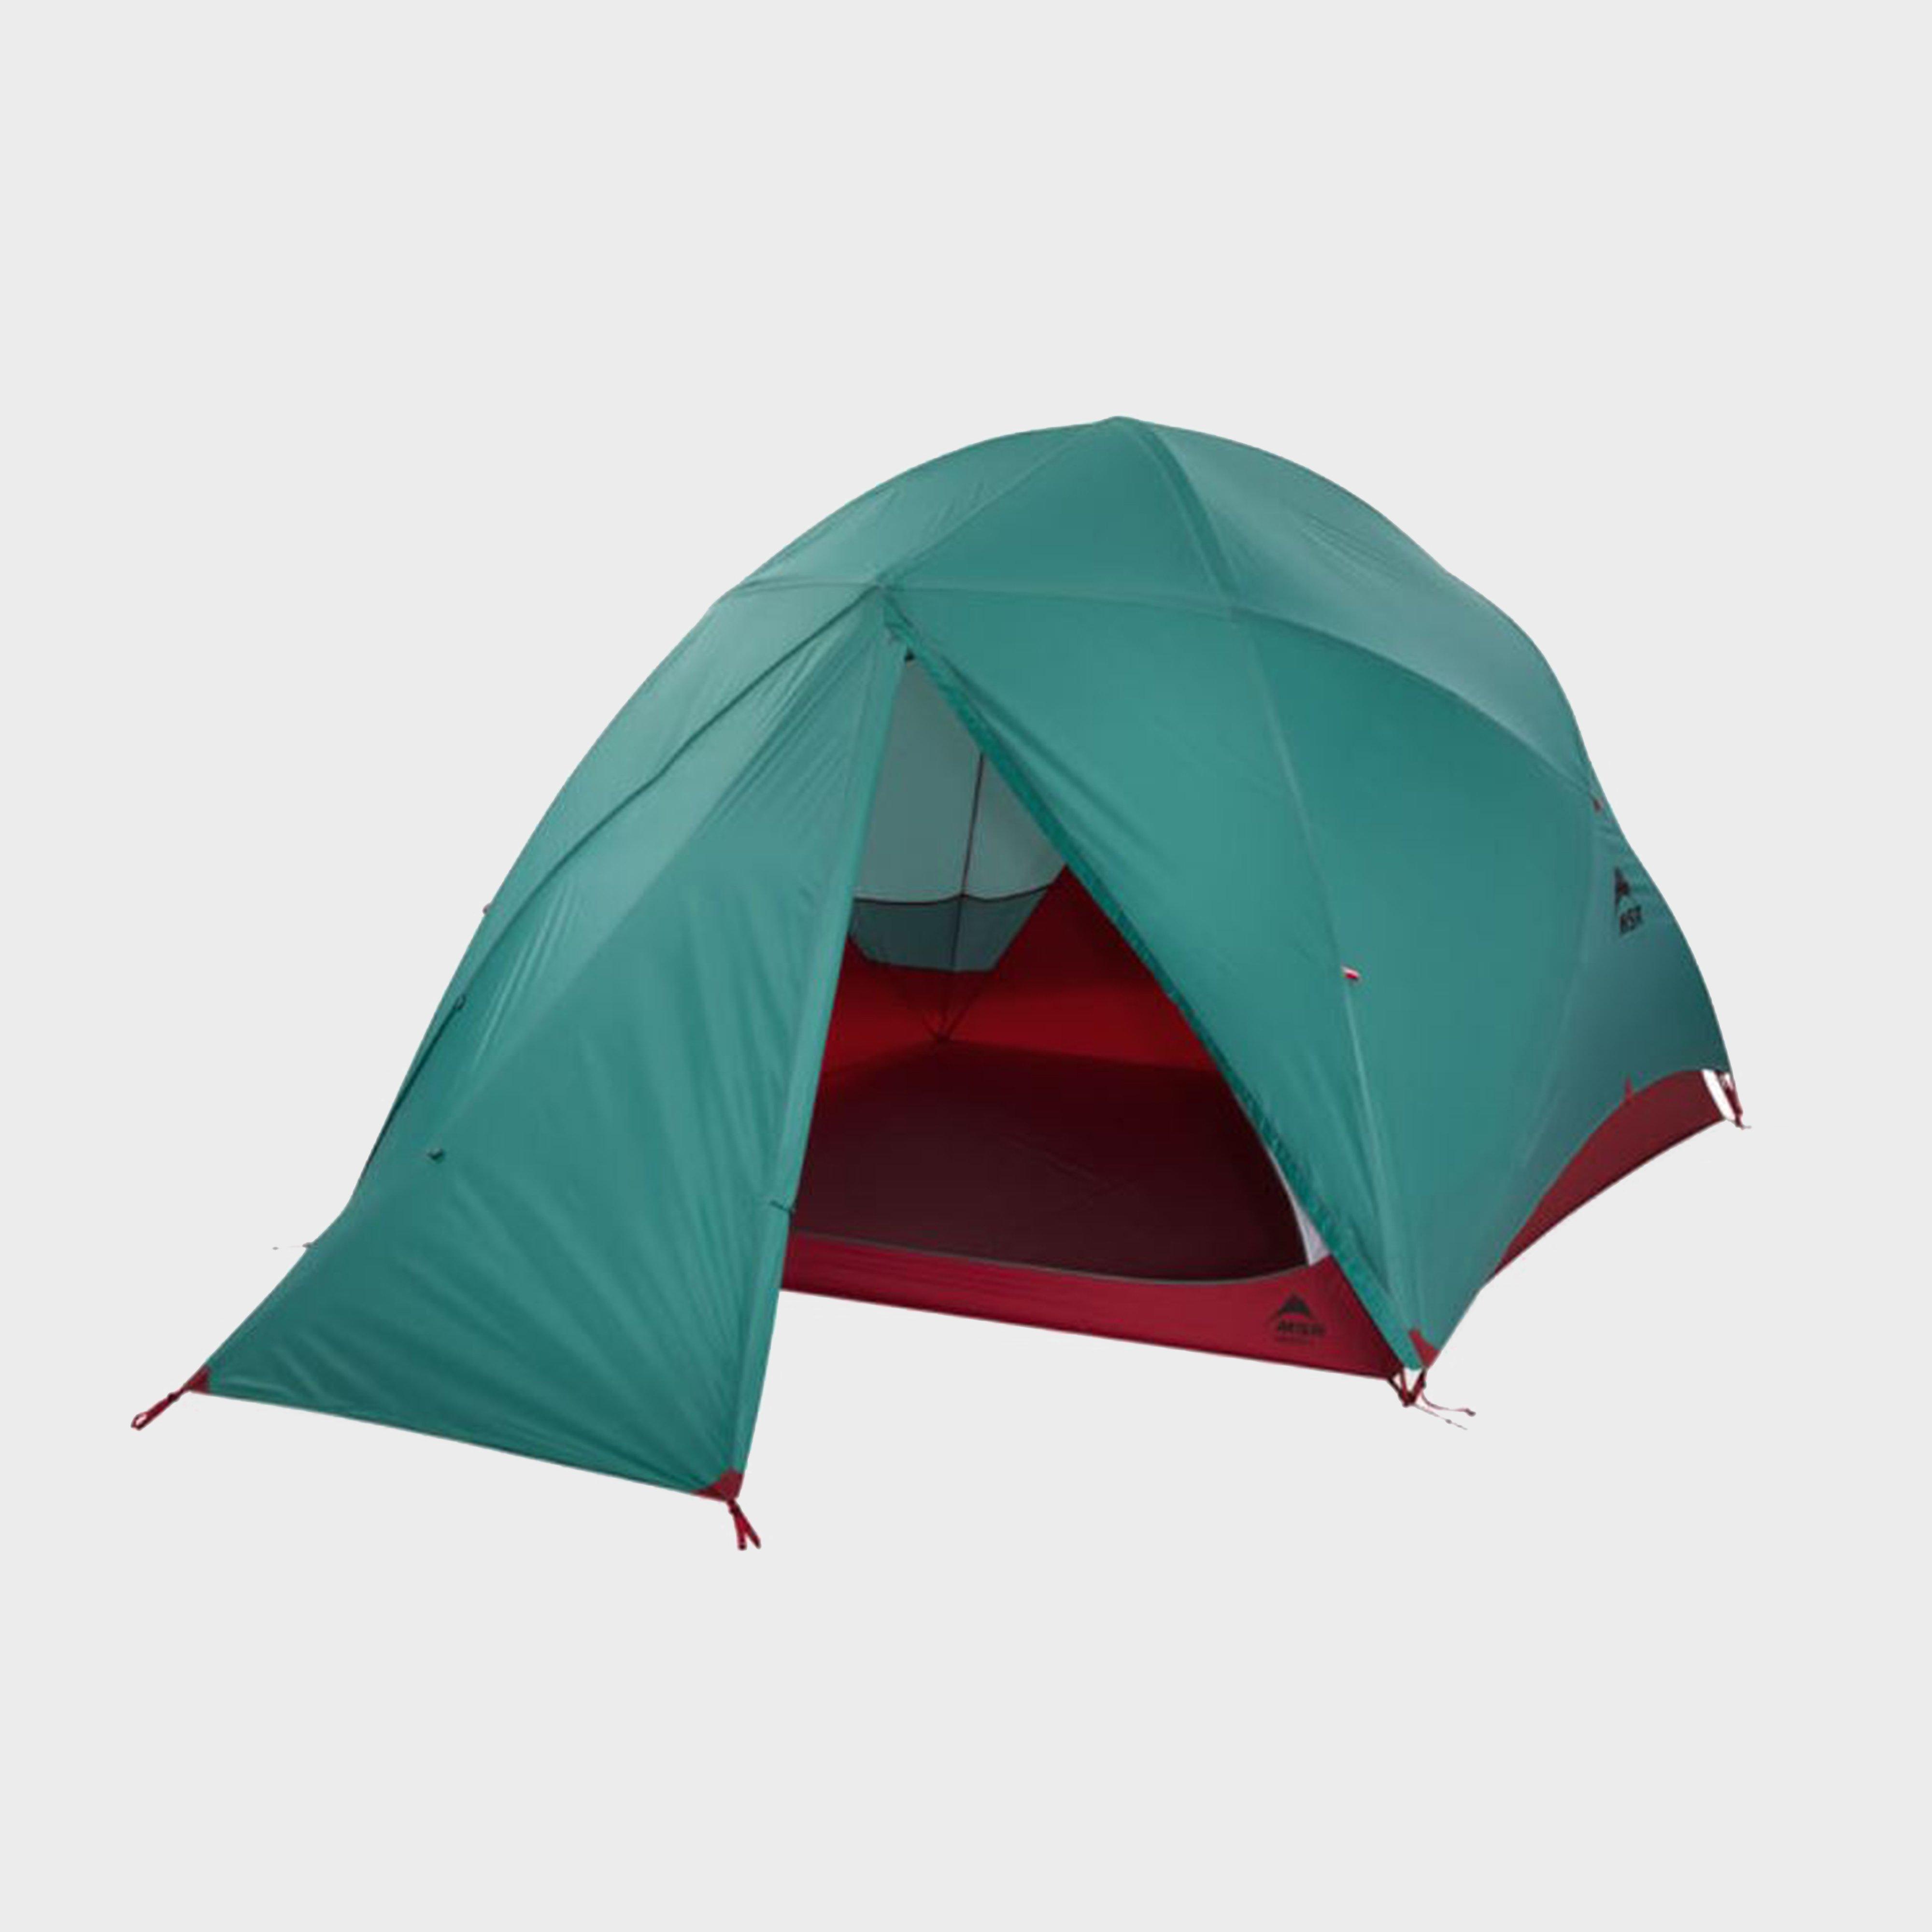 Msr Habitude 6 Family Camping Tent - Green/green  Green/green